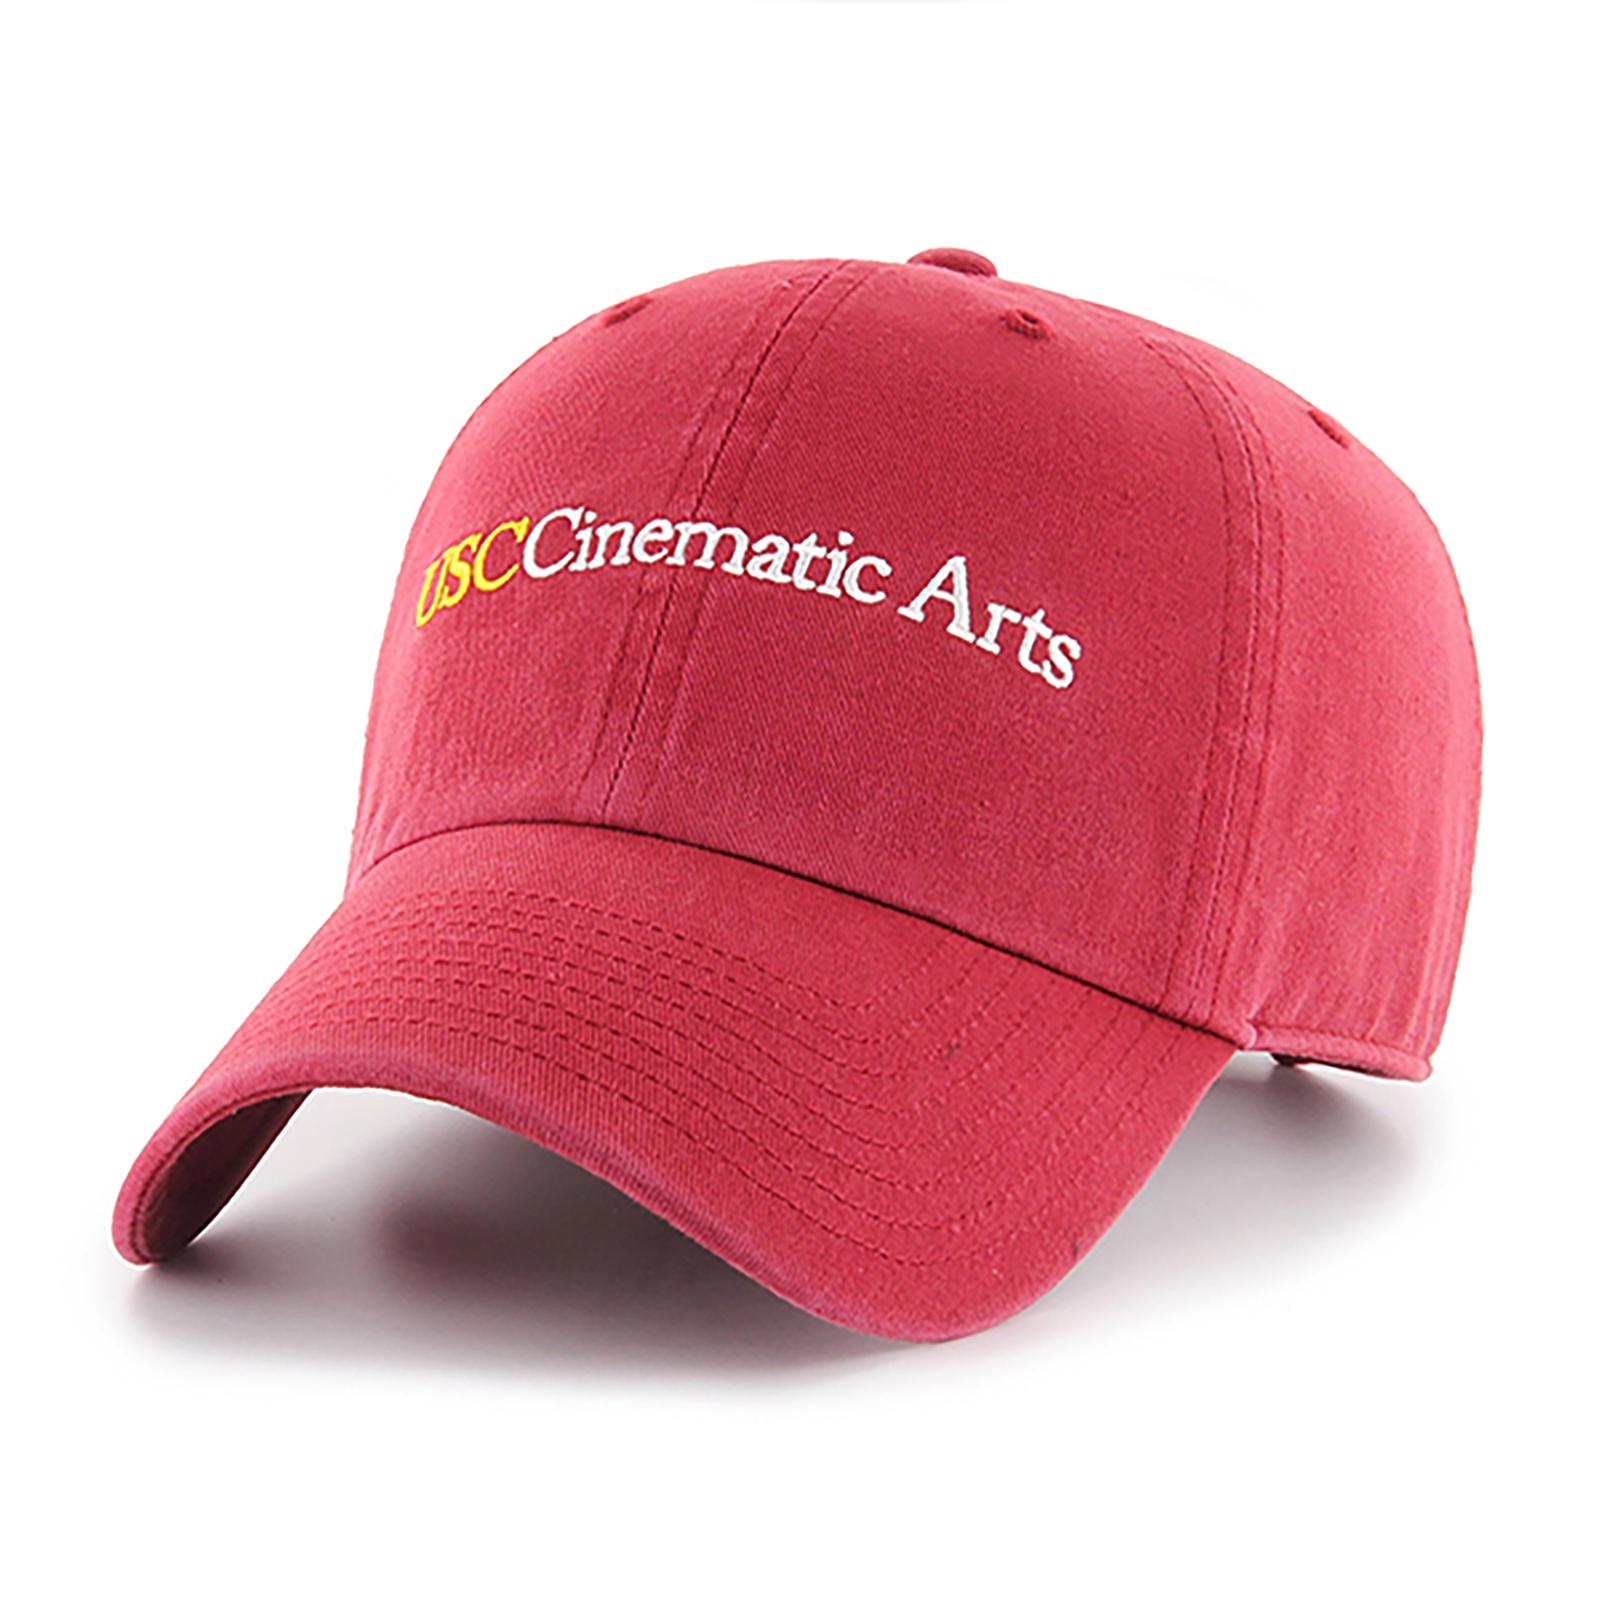 USC School of Cinematic Arts Cap Cardinal Fits All image01